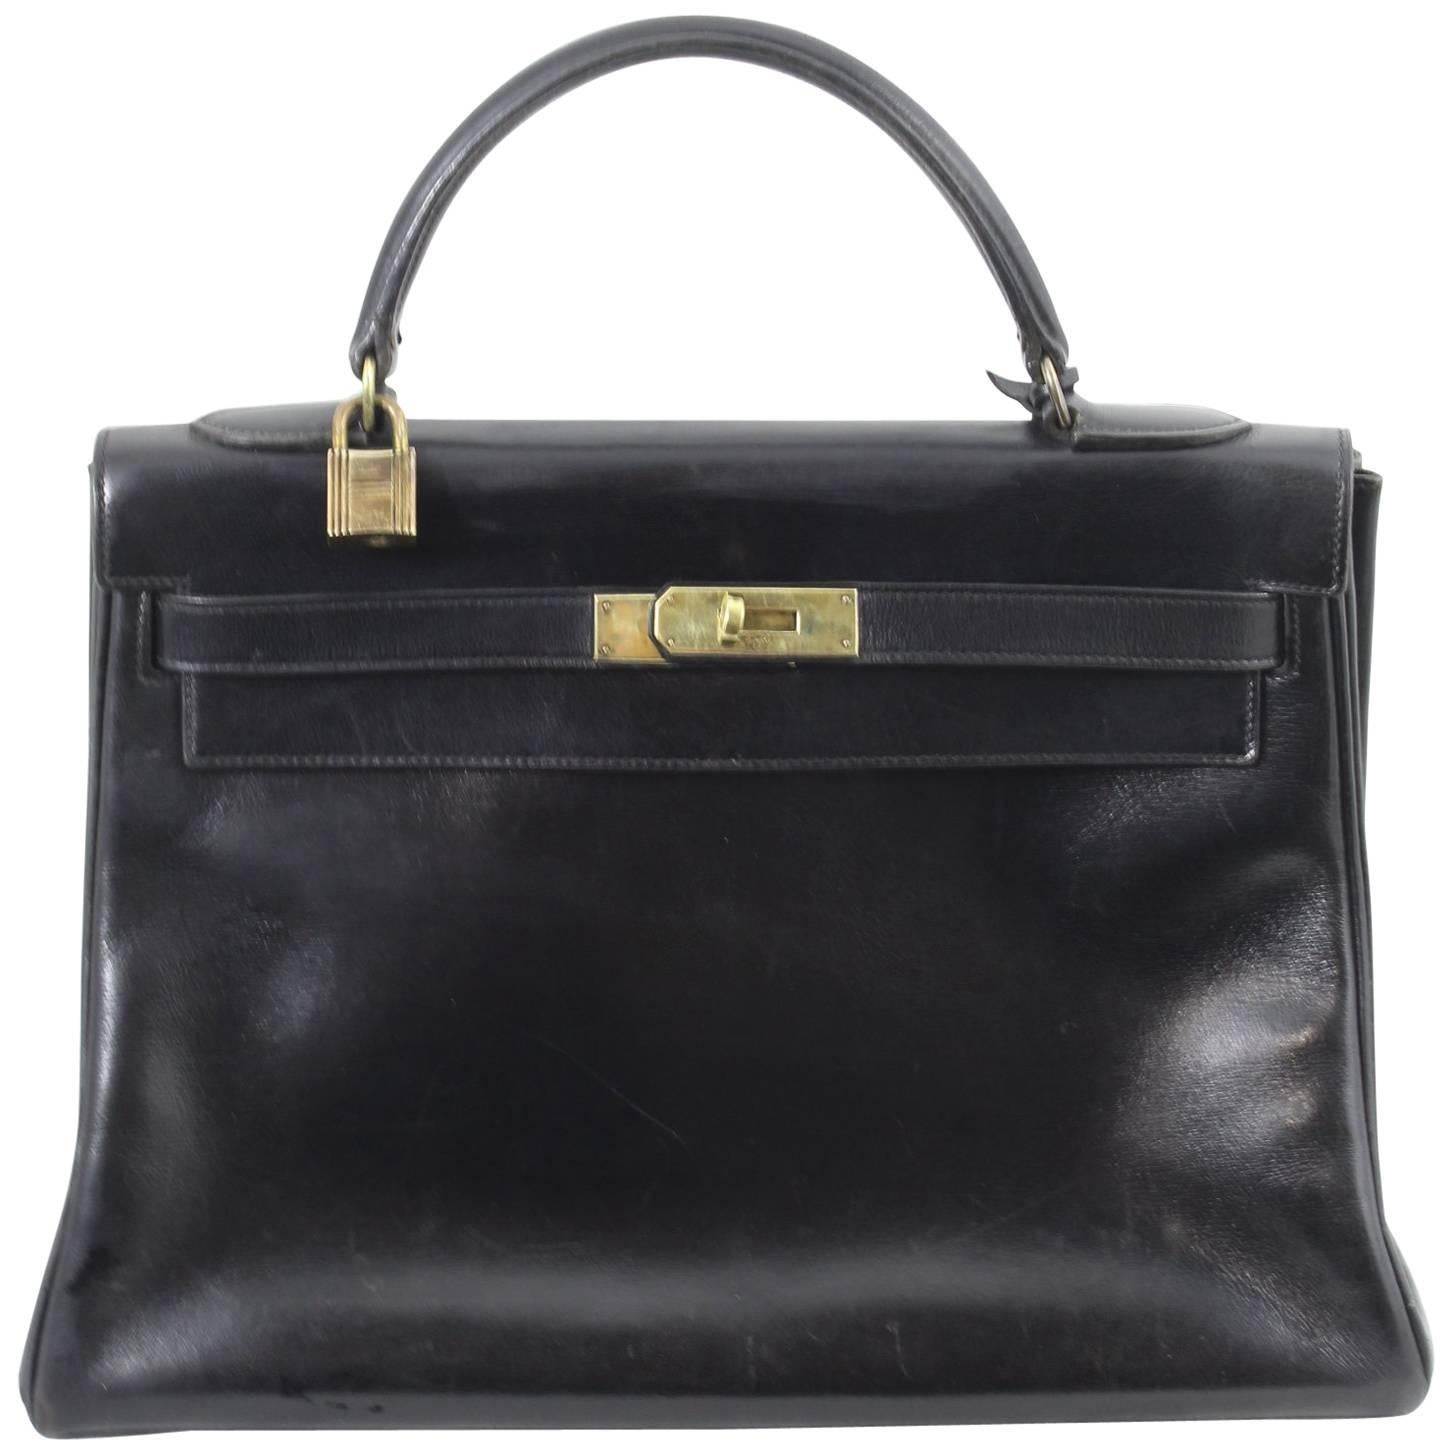 Vintage Hemes Kelly 32 Bag in Black Box Leather